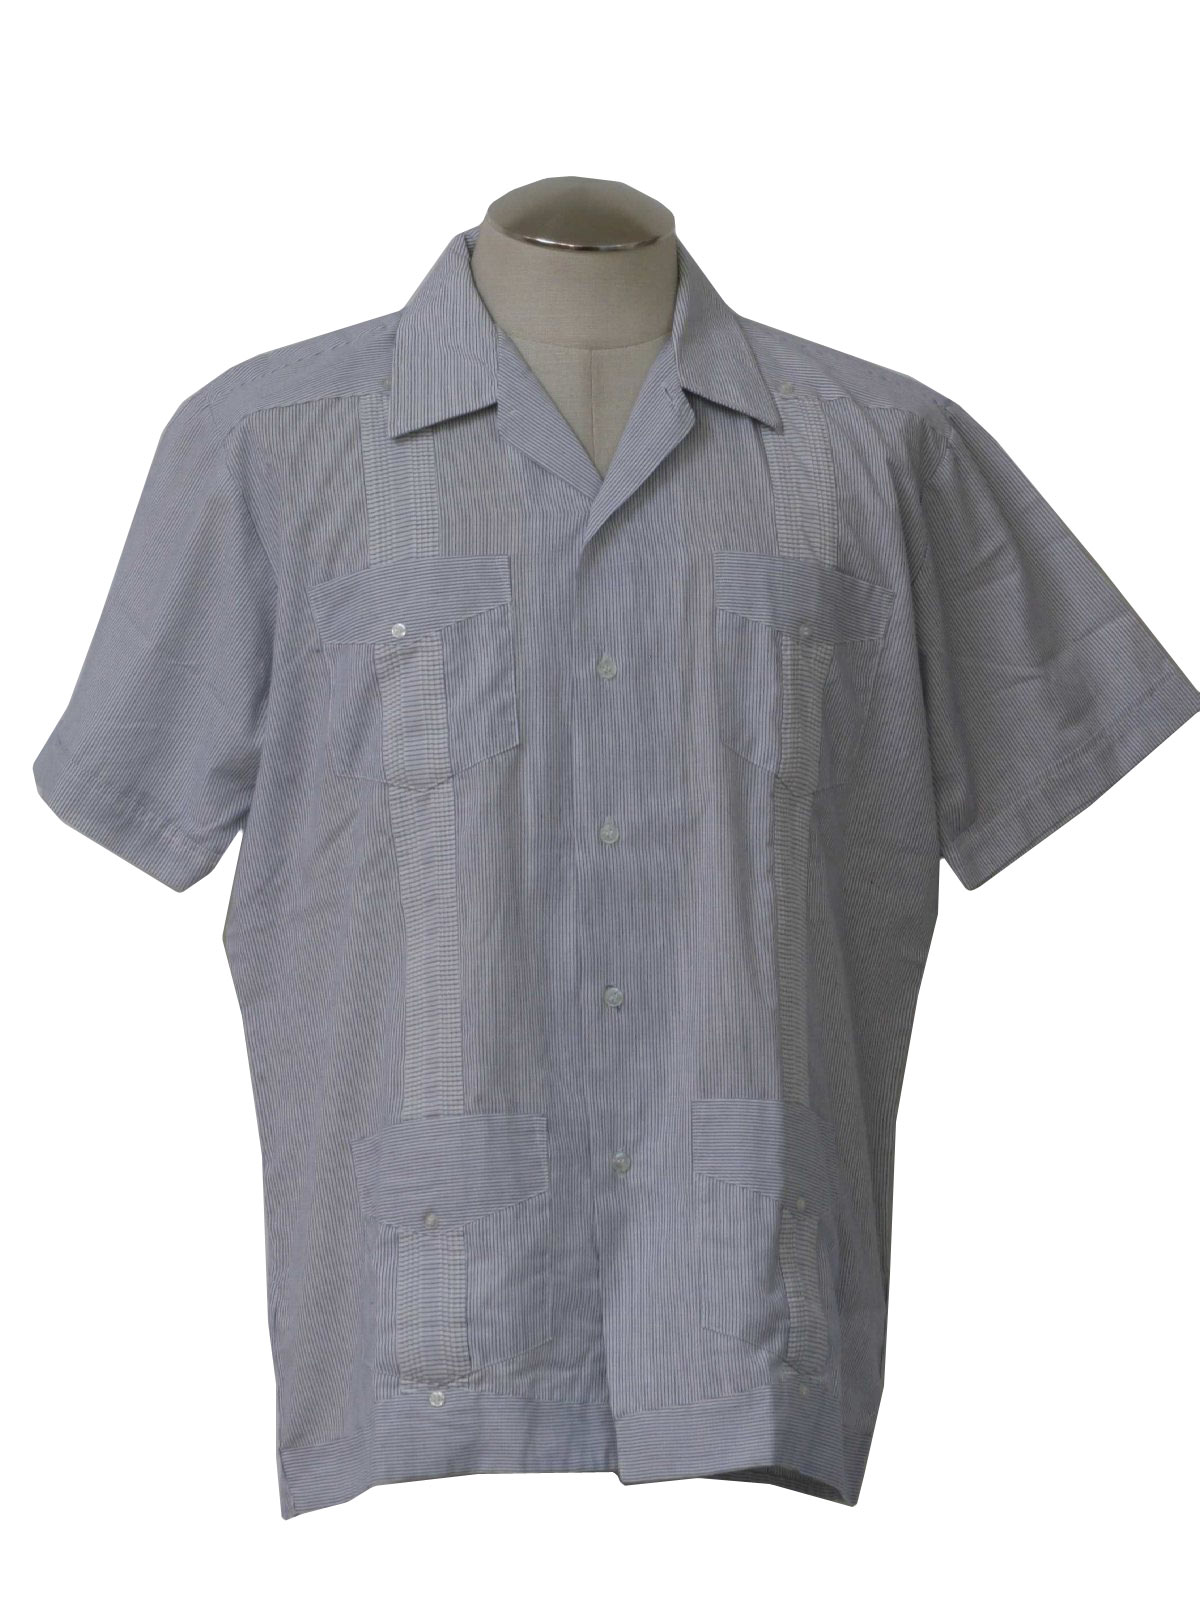 1980's Vintage Bandolero Guayabera Shirt: 80s -Bandolero- Mens blue and ...